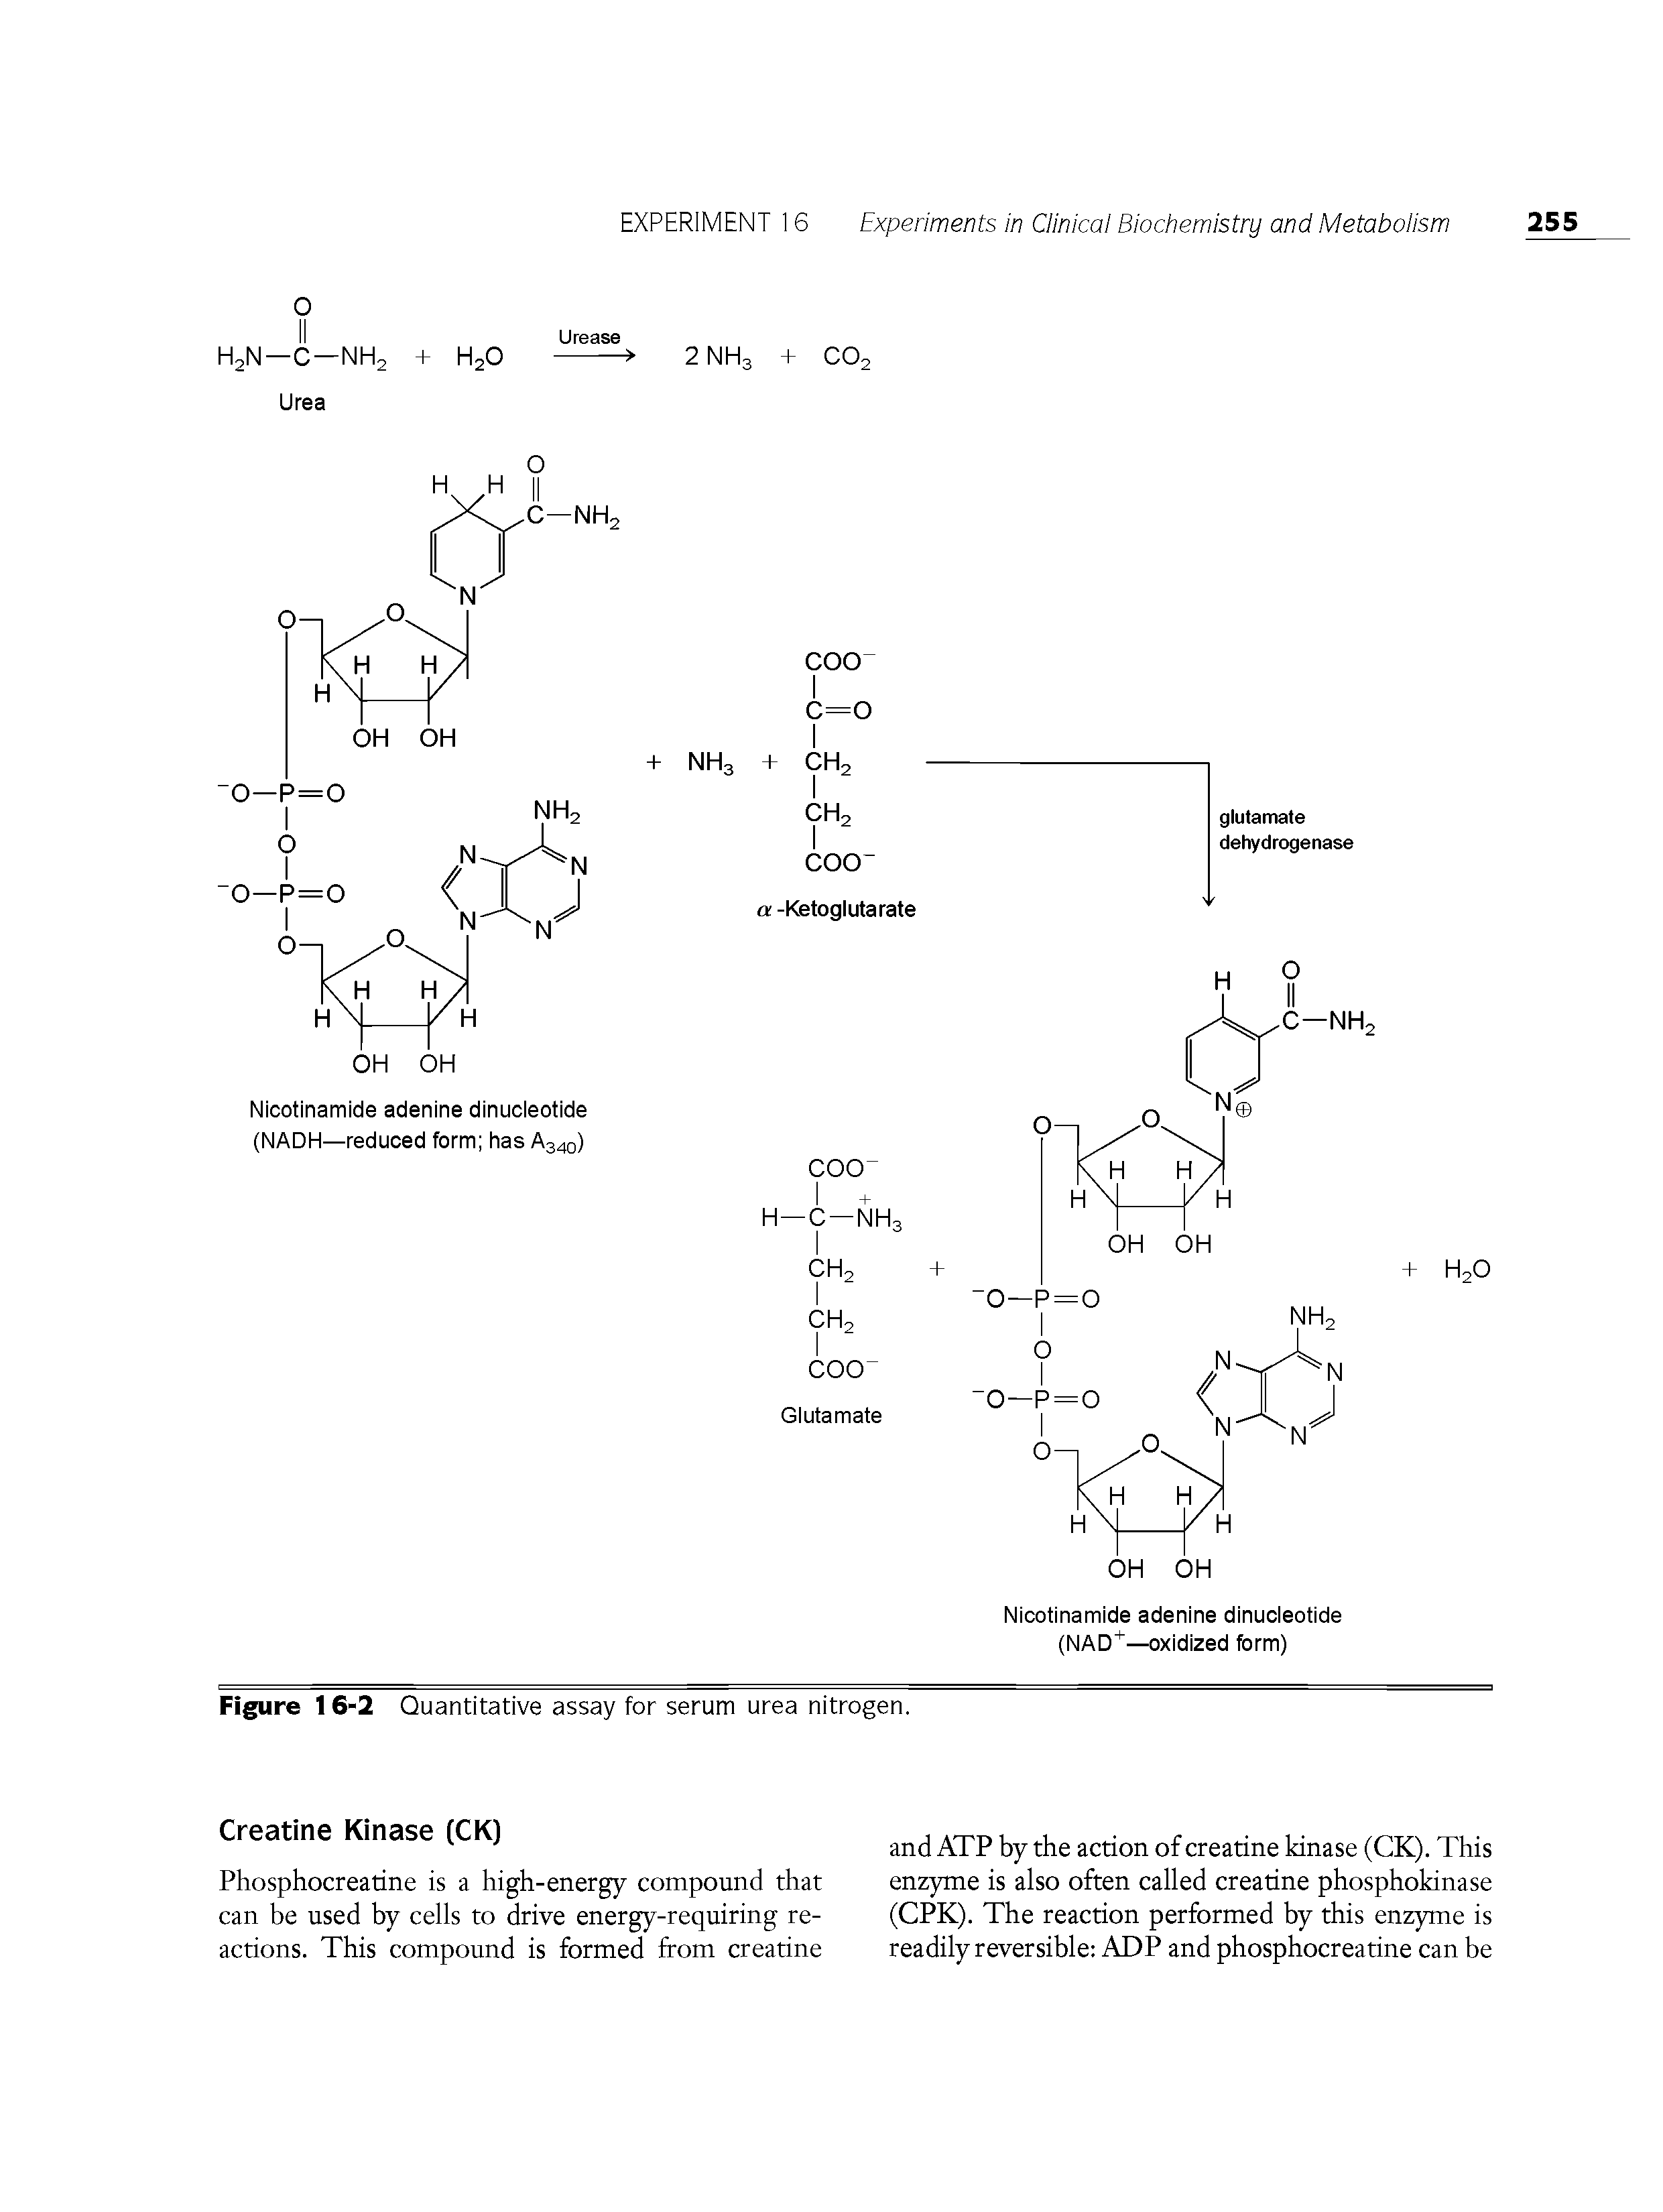 Figure 16-2 Quantitative assay for serum urea nitrogen.